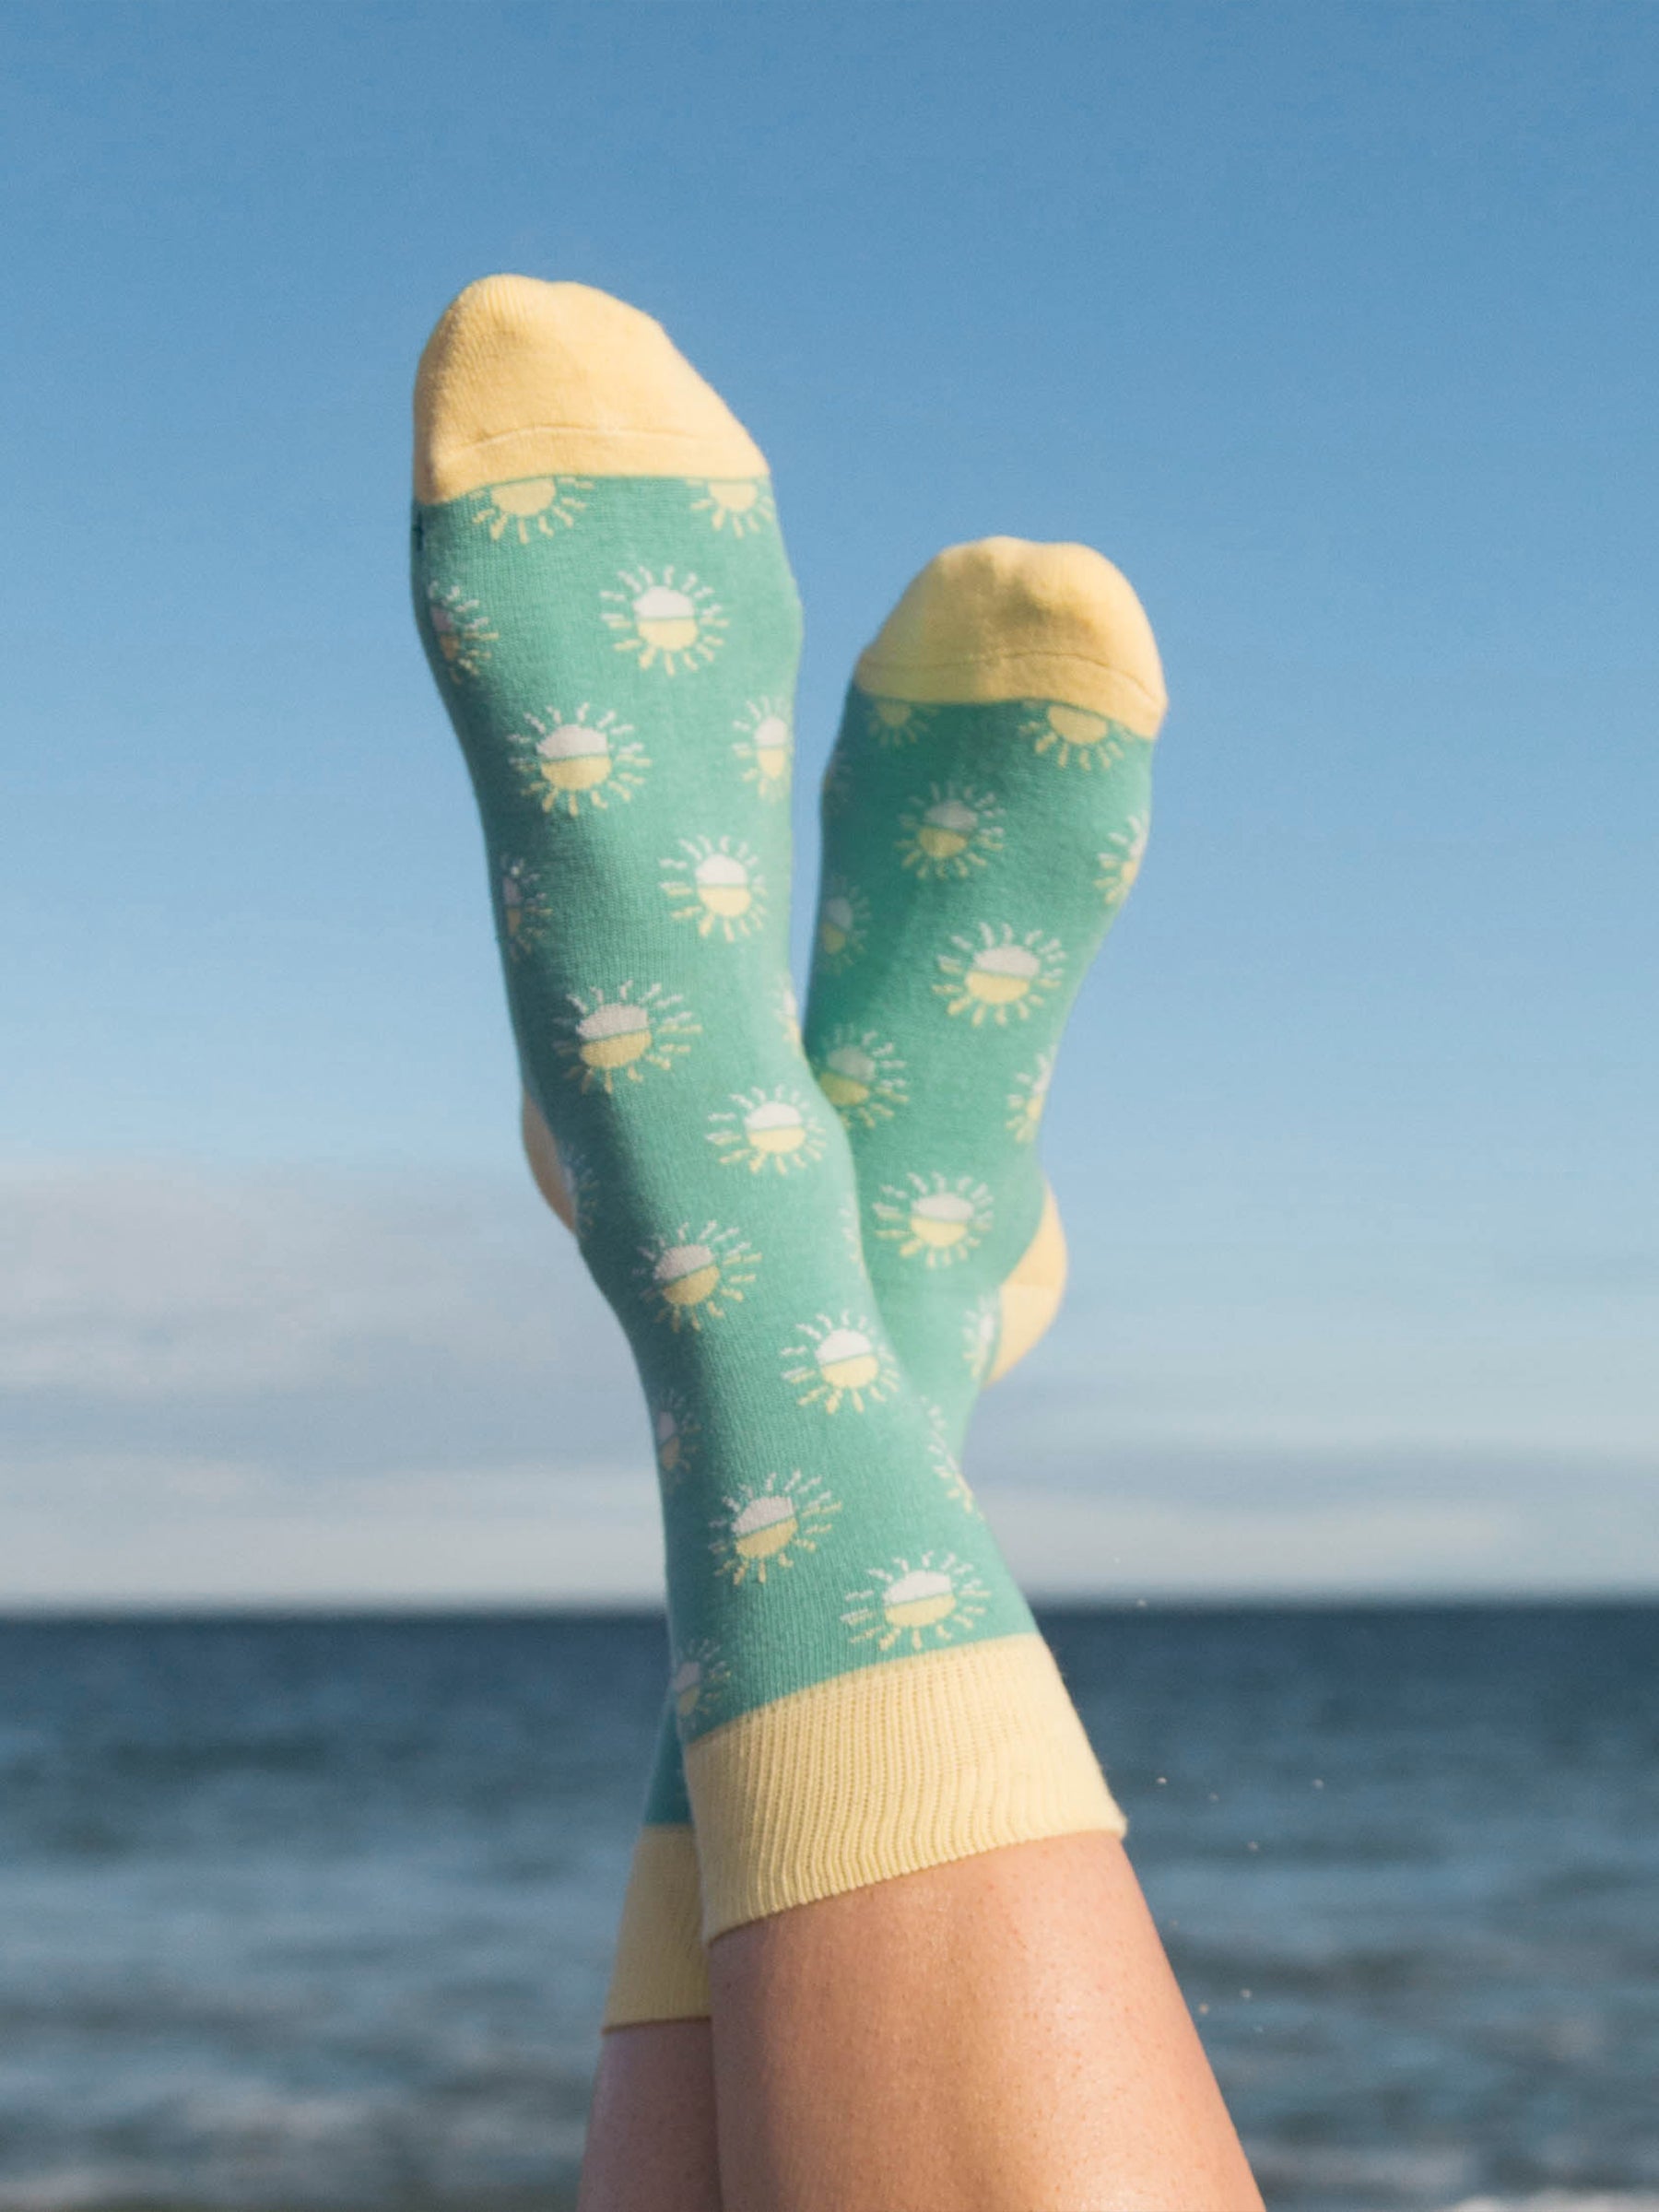 Make Waves Socks - Set of 3 by Happy Earth